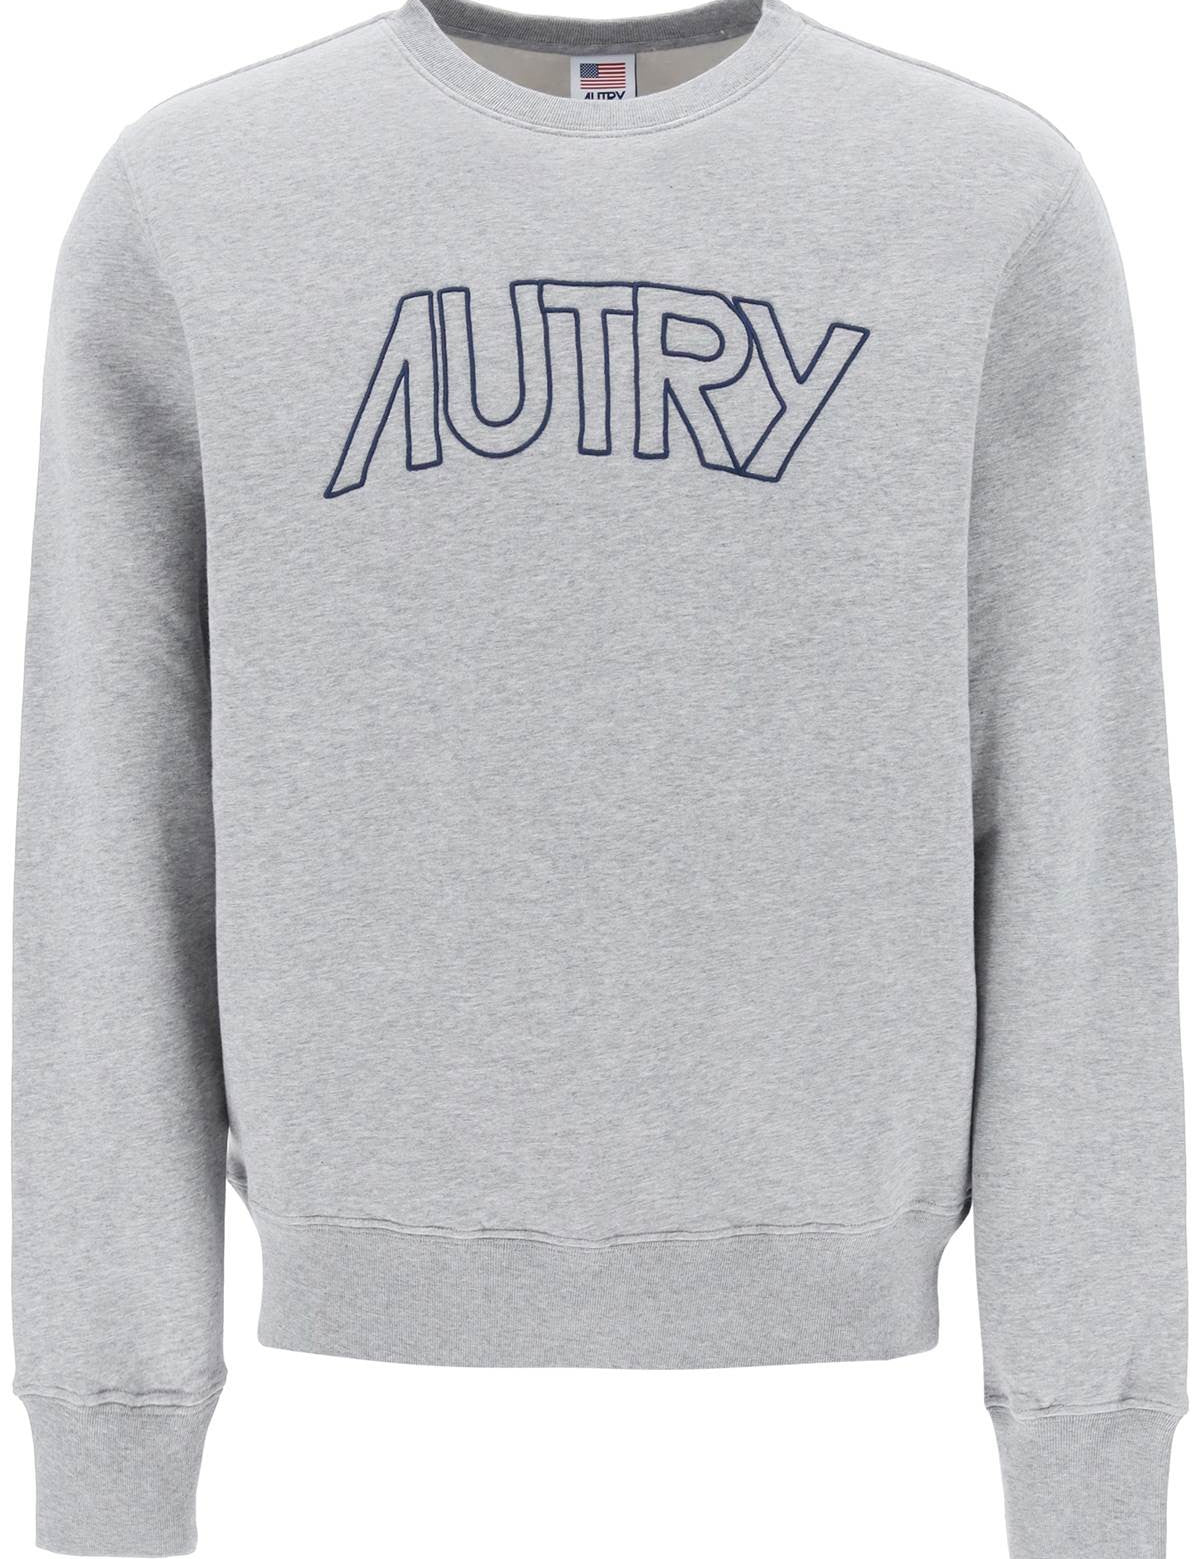 autry-embroidered-logo-icon-sweatshirt.jpg